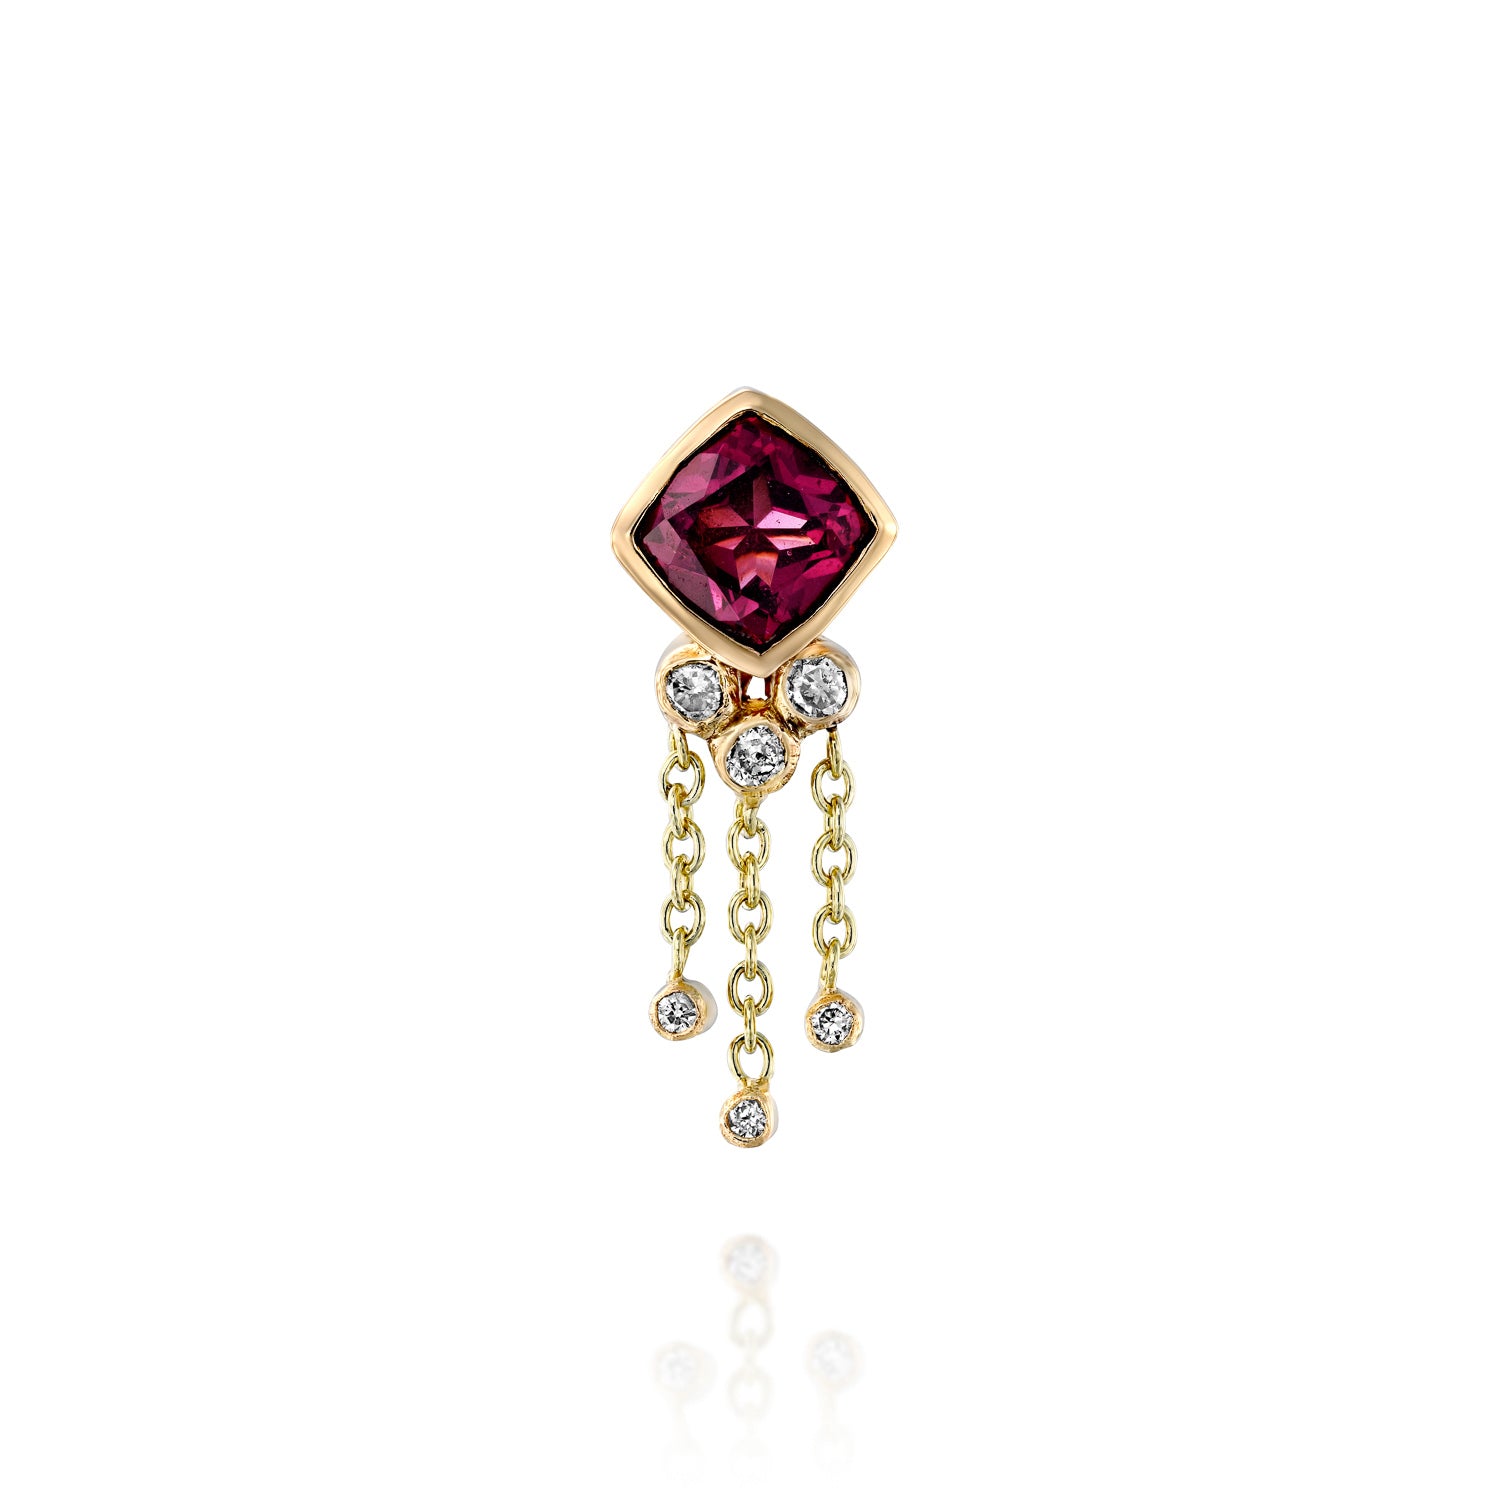 Dharamkot Earring &amp; Rhodolite - one of a kind - Danielle Gerber Freedom Jewelry